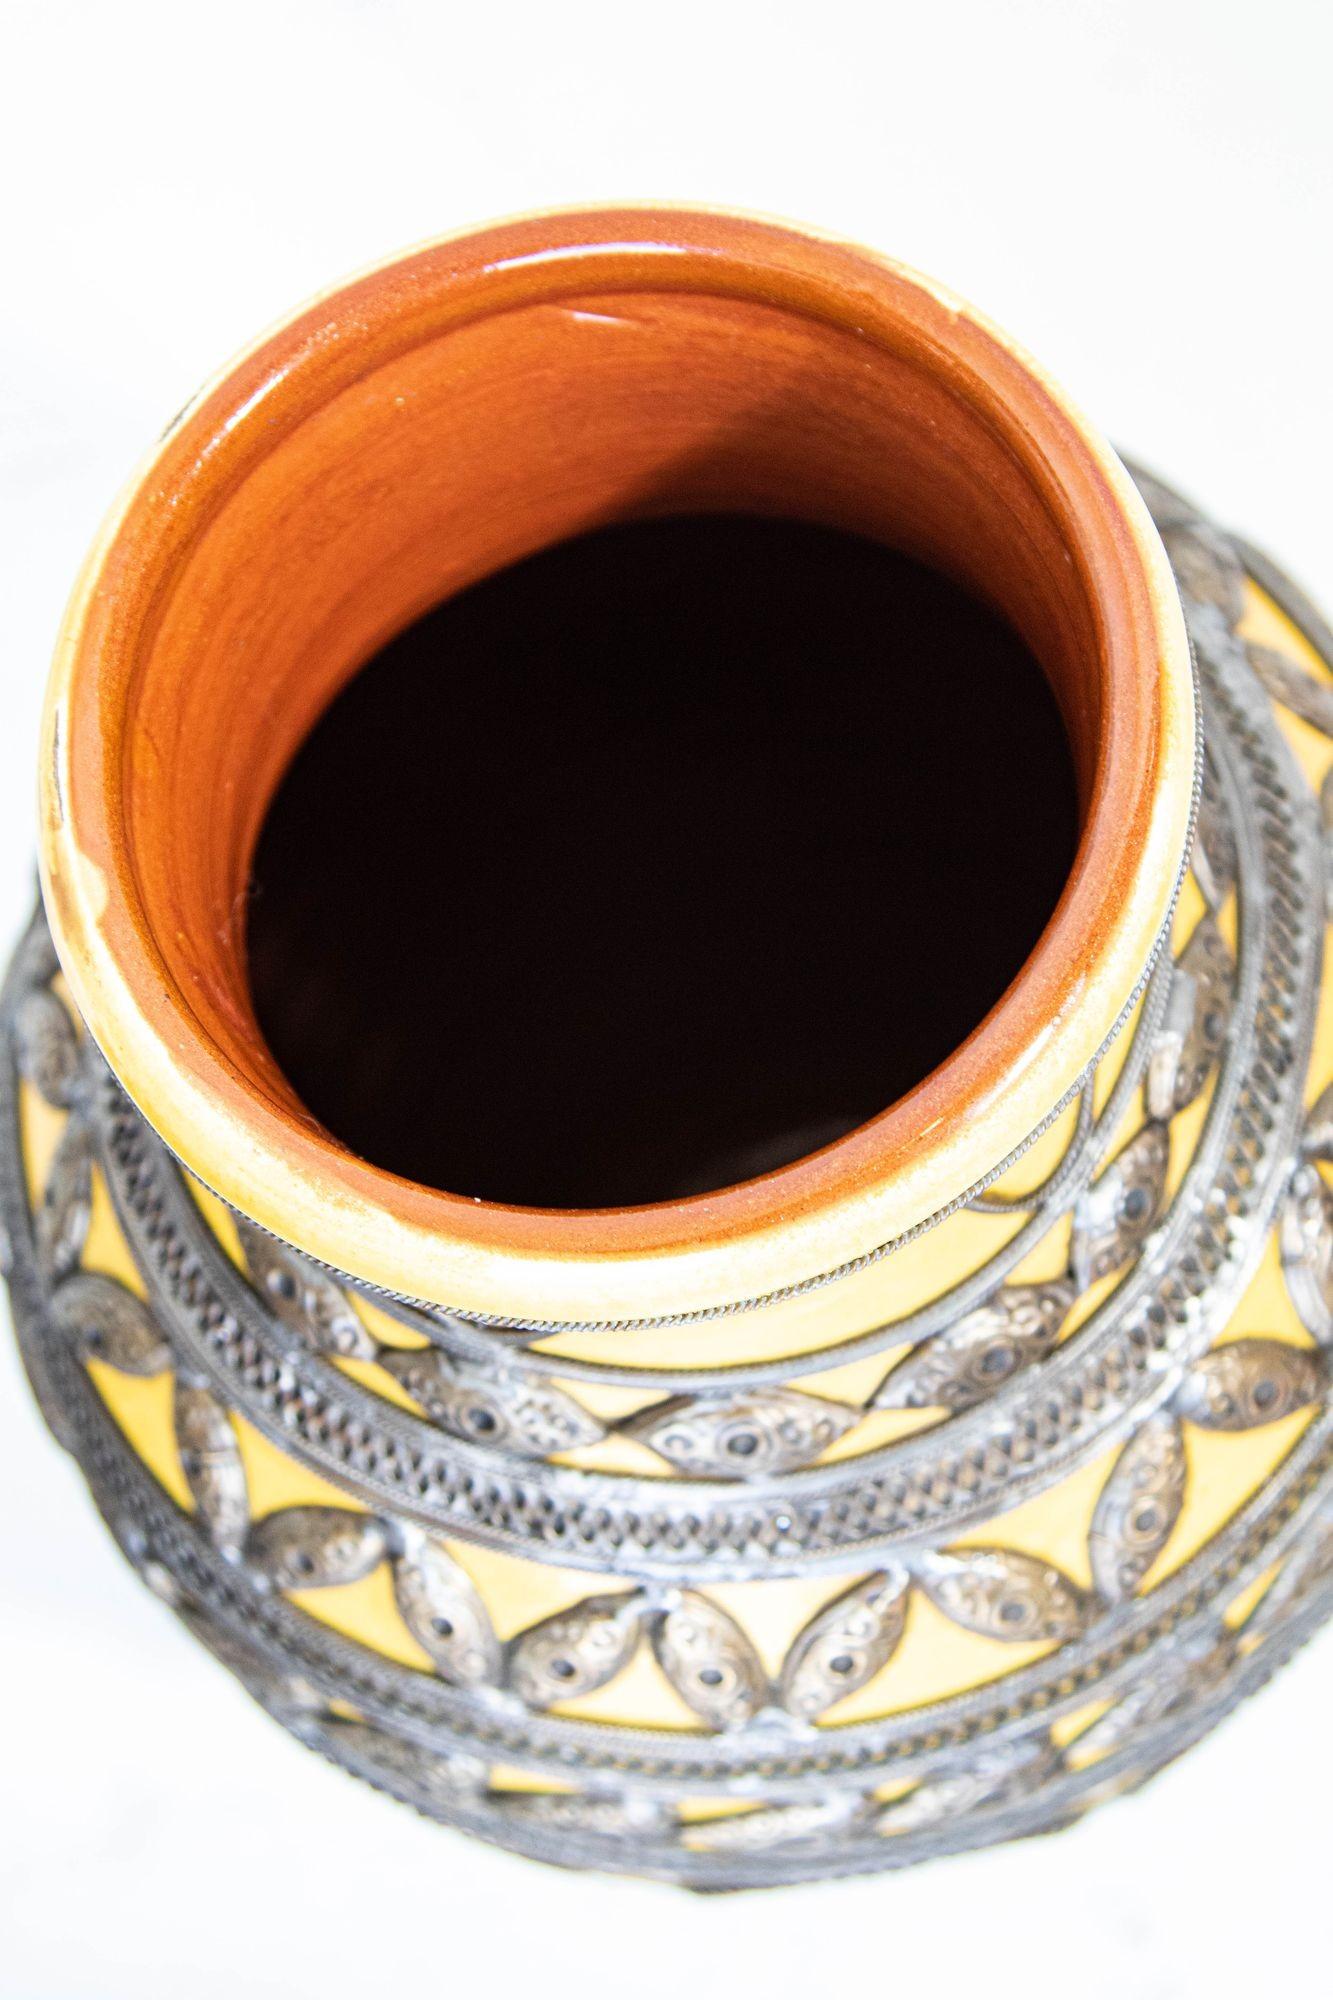 Antique Moroccan Ceramic Vase Bright Yellow with Metal Moorish Filigree overlaid For Sale 4